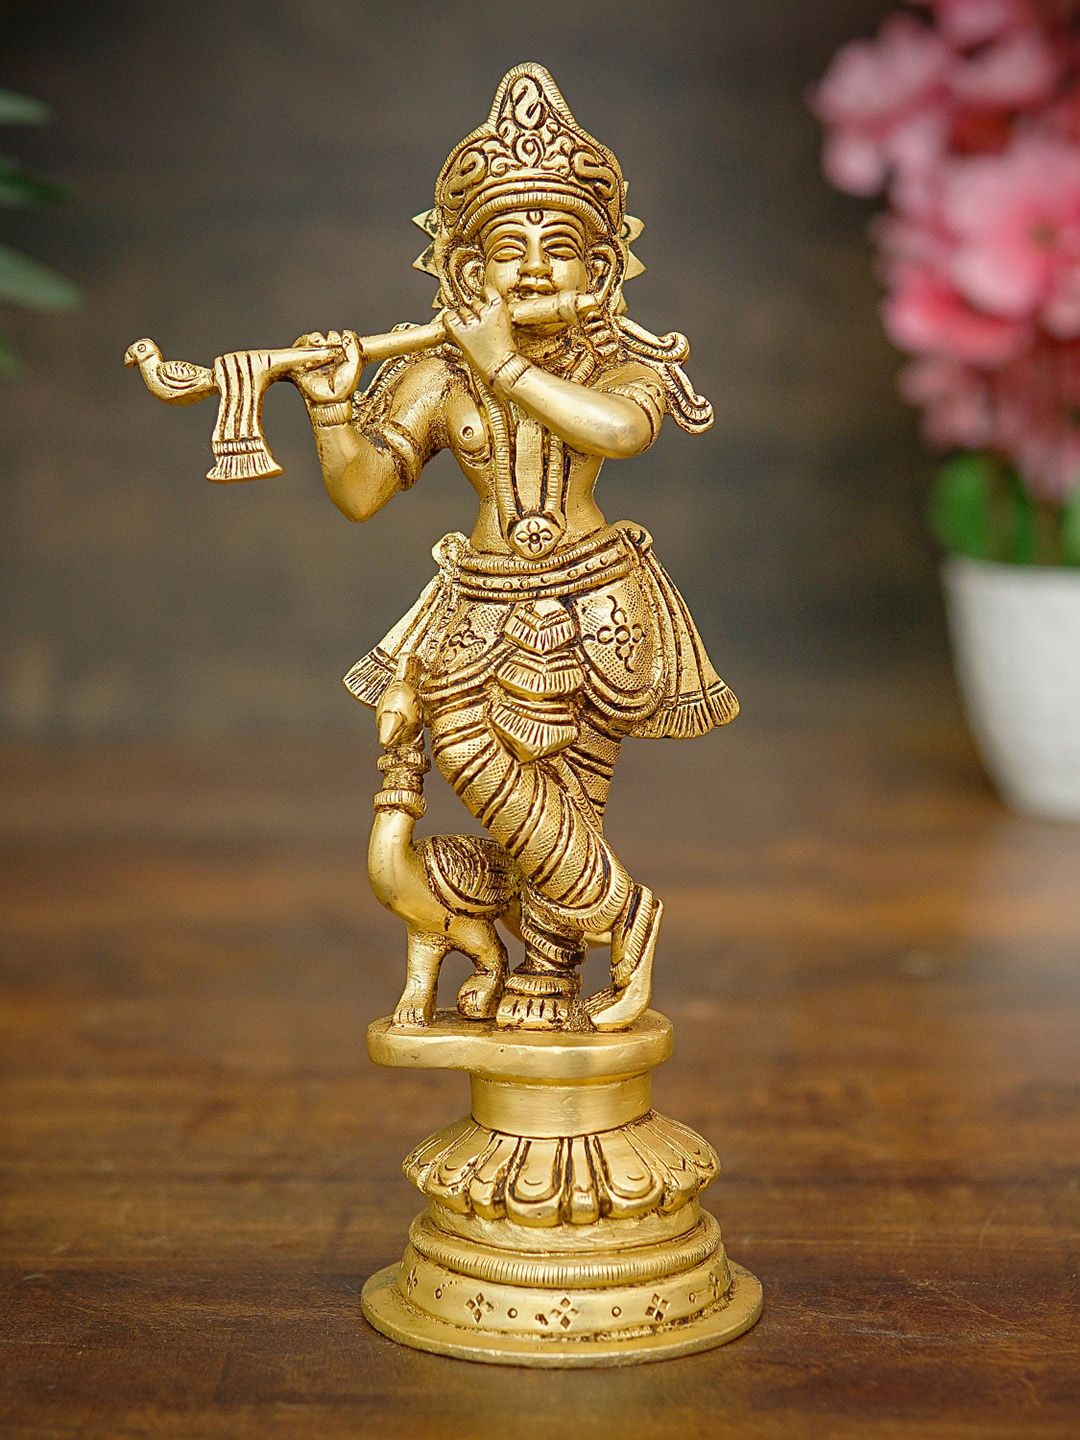 StatueStudio Brass Gold-Toned Lord Krishna Idol Price in India